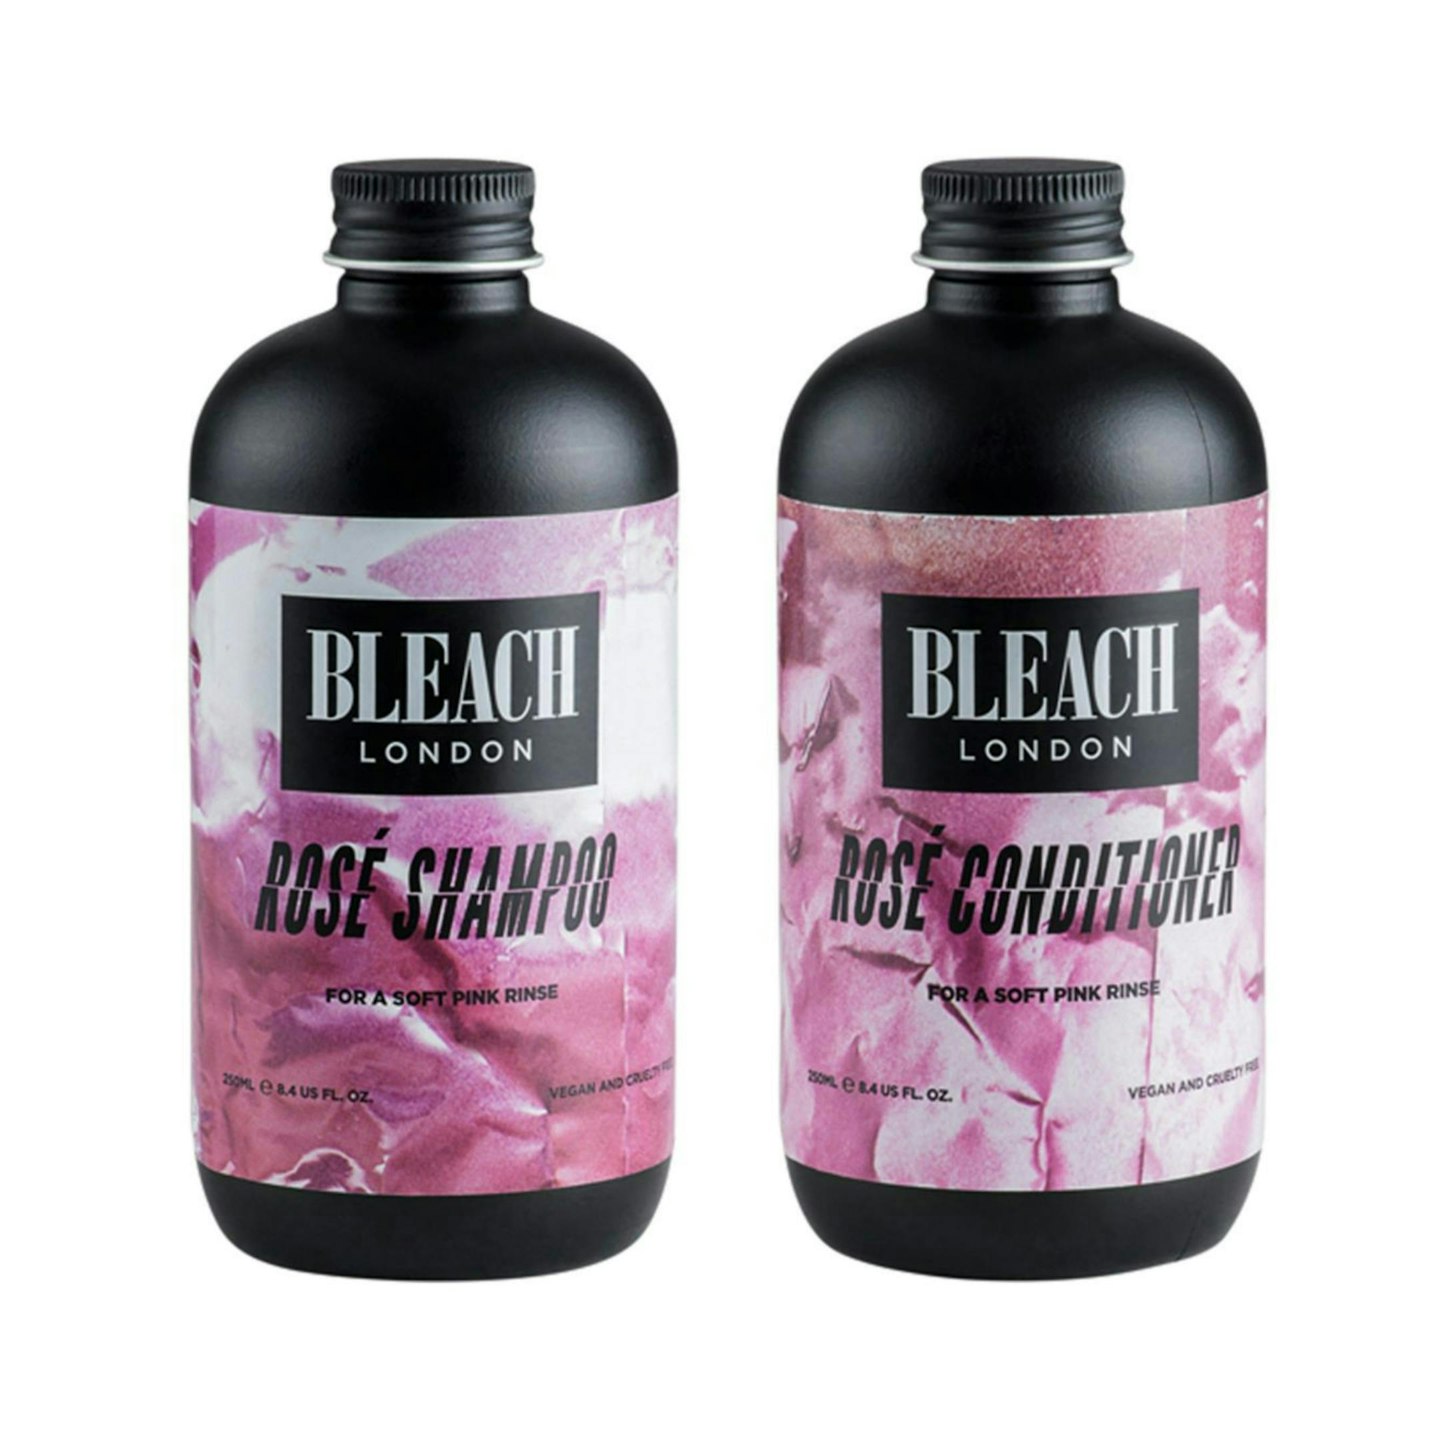 Bleach London Rosé Shampoo and Conditioner